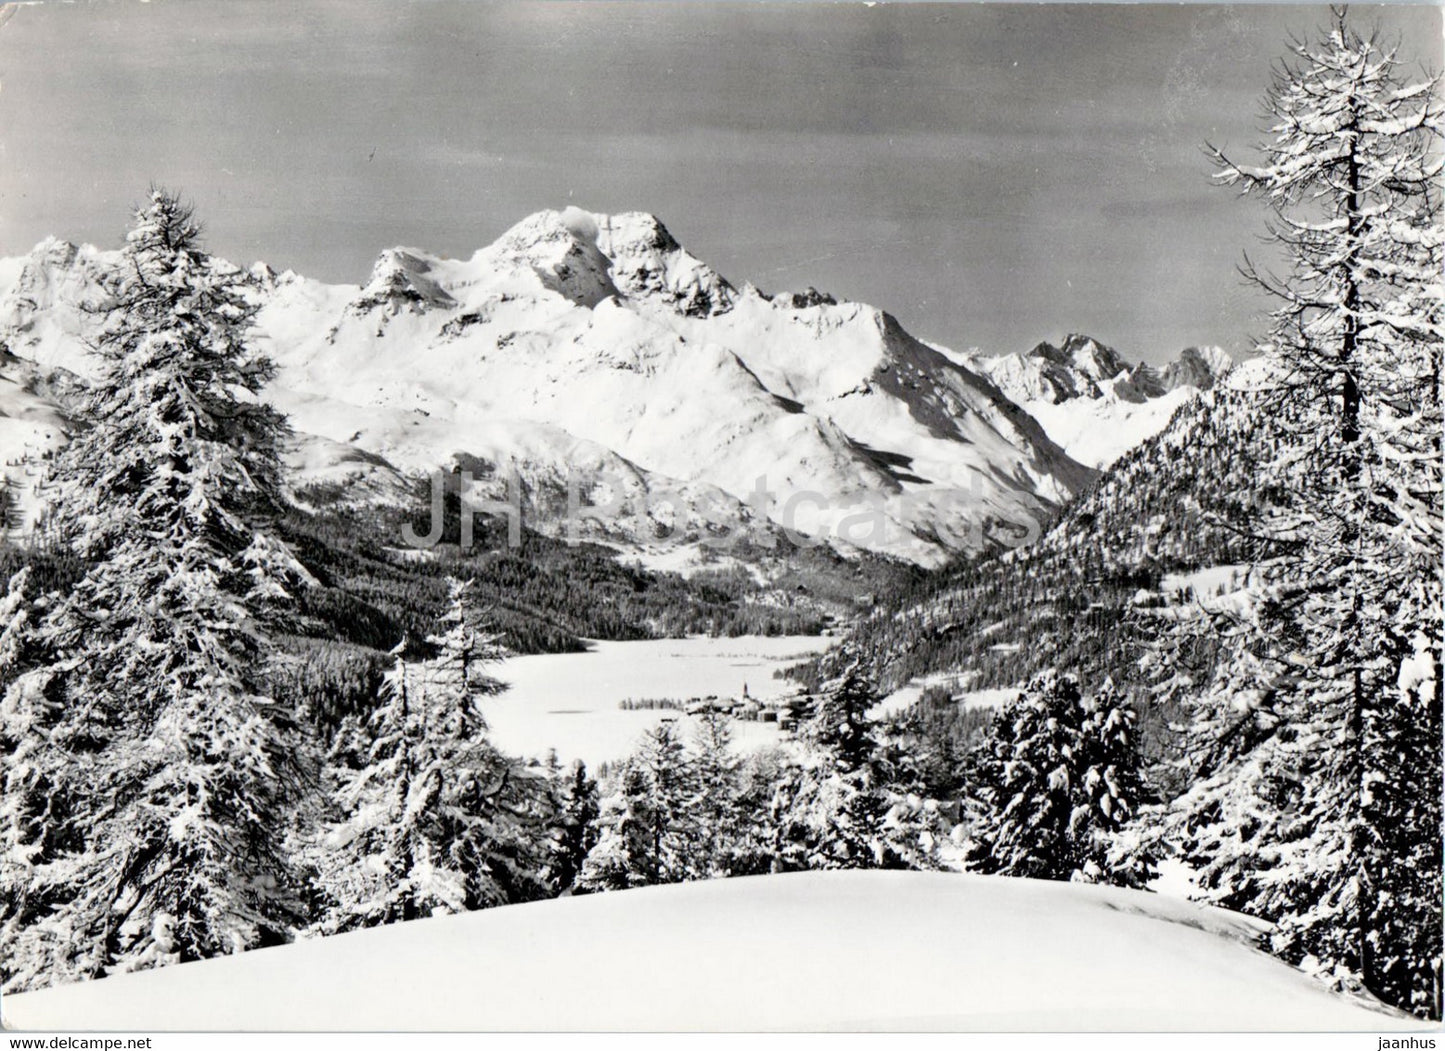 St Moritz Oberalpina - Blick Silvaplana - 4092 - old postcard - 1952 - Switzerland - used - JH Postcards